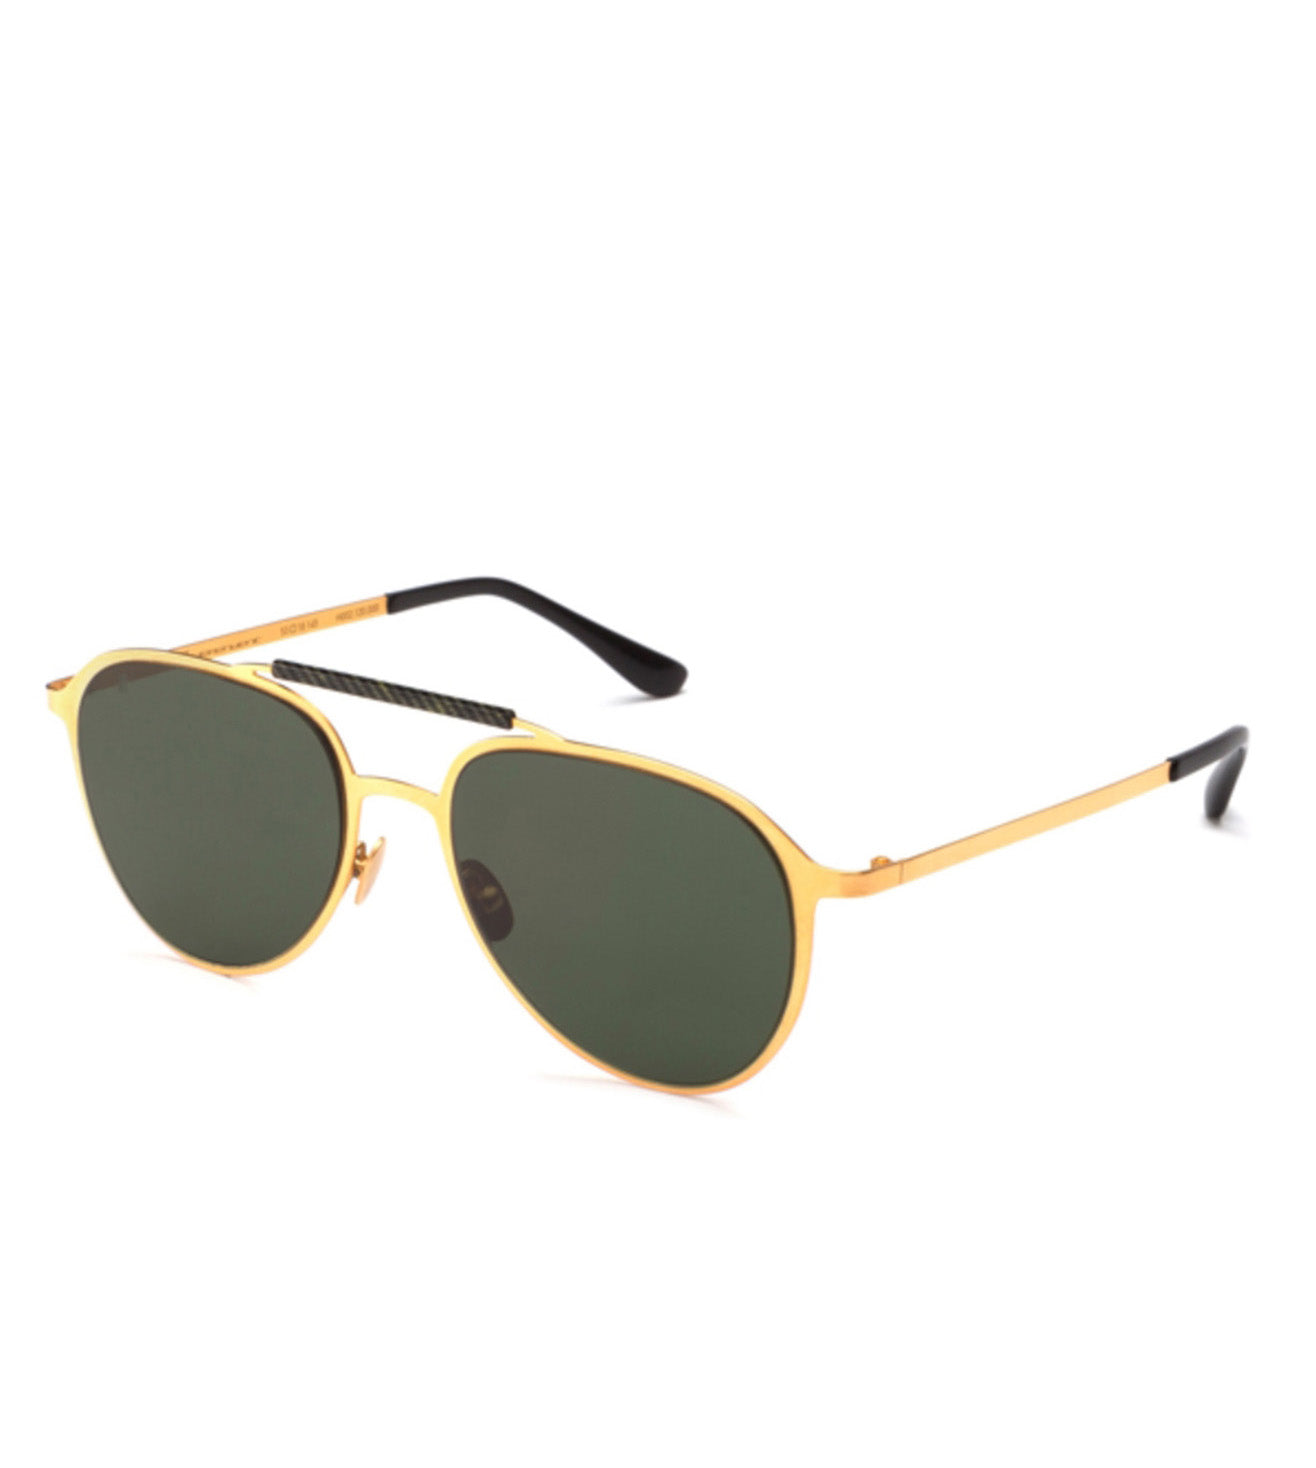 Hublot Unisex Green Aviator Sunglasses